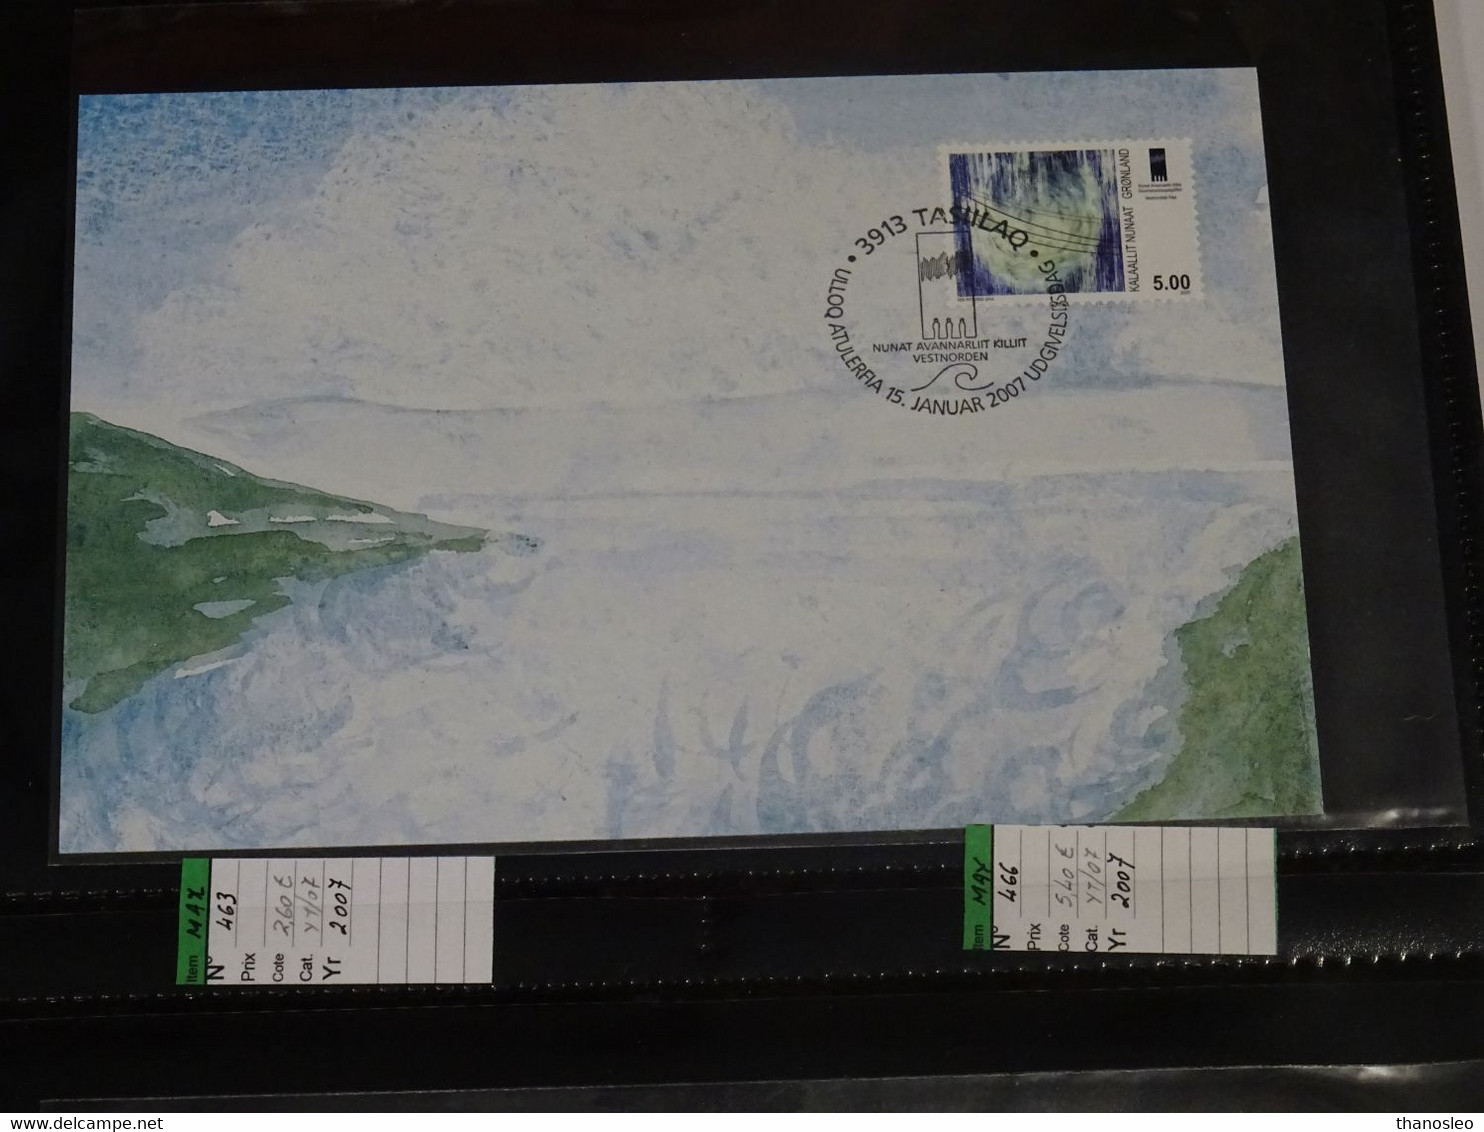 Greenland 2007 Hydroelectric Power Maximum Card VF - Maximumkarten (MC)